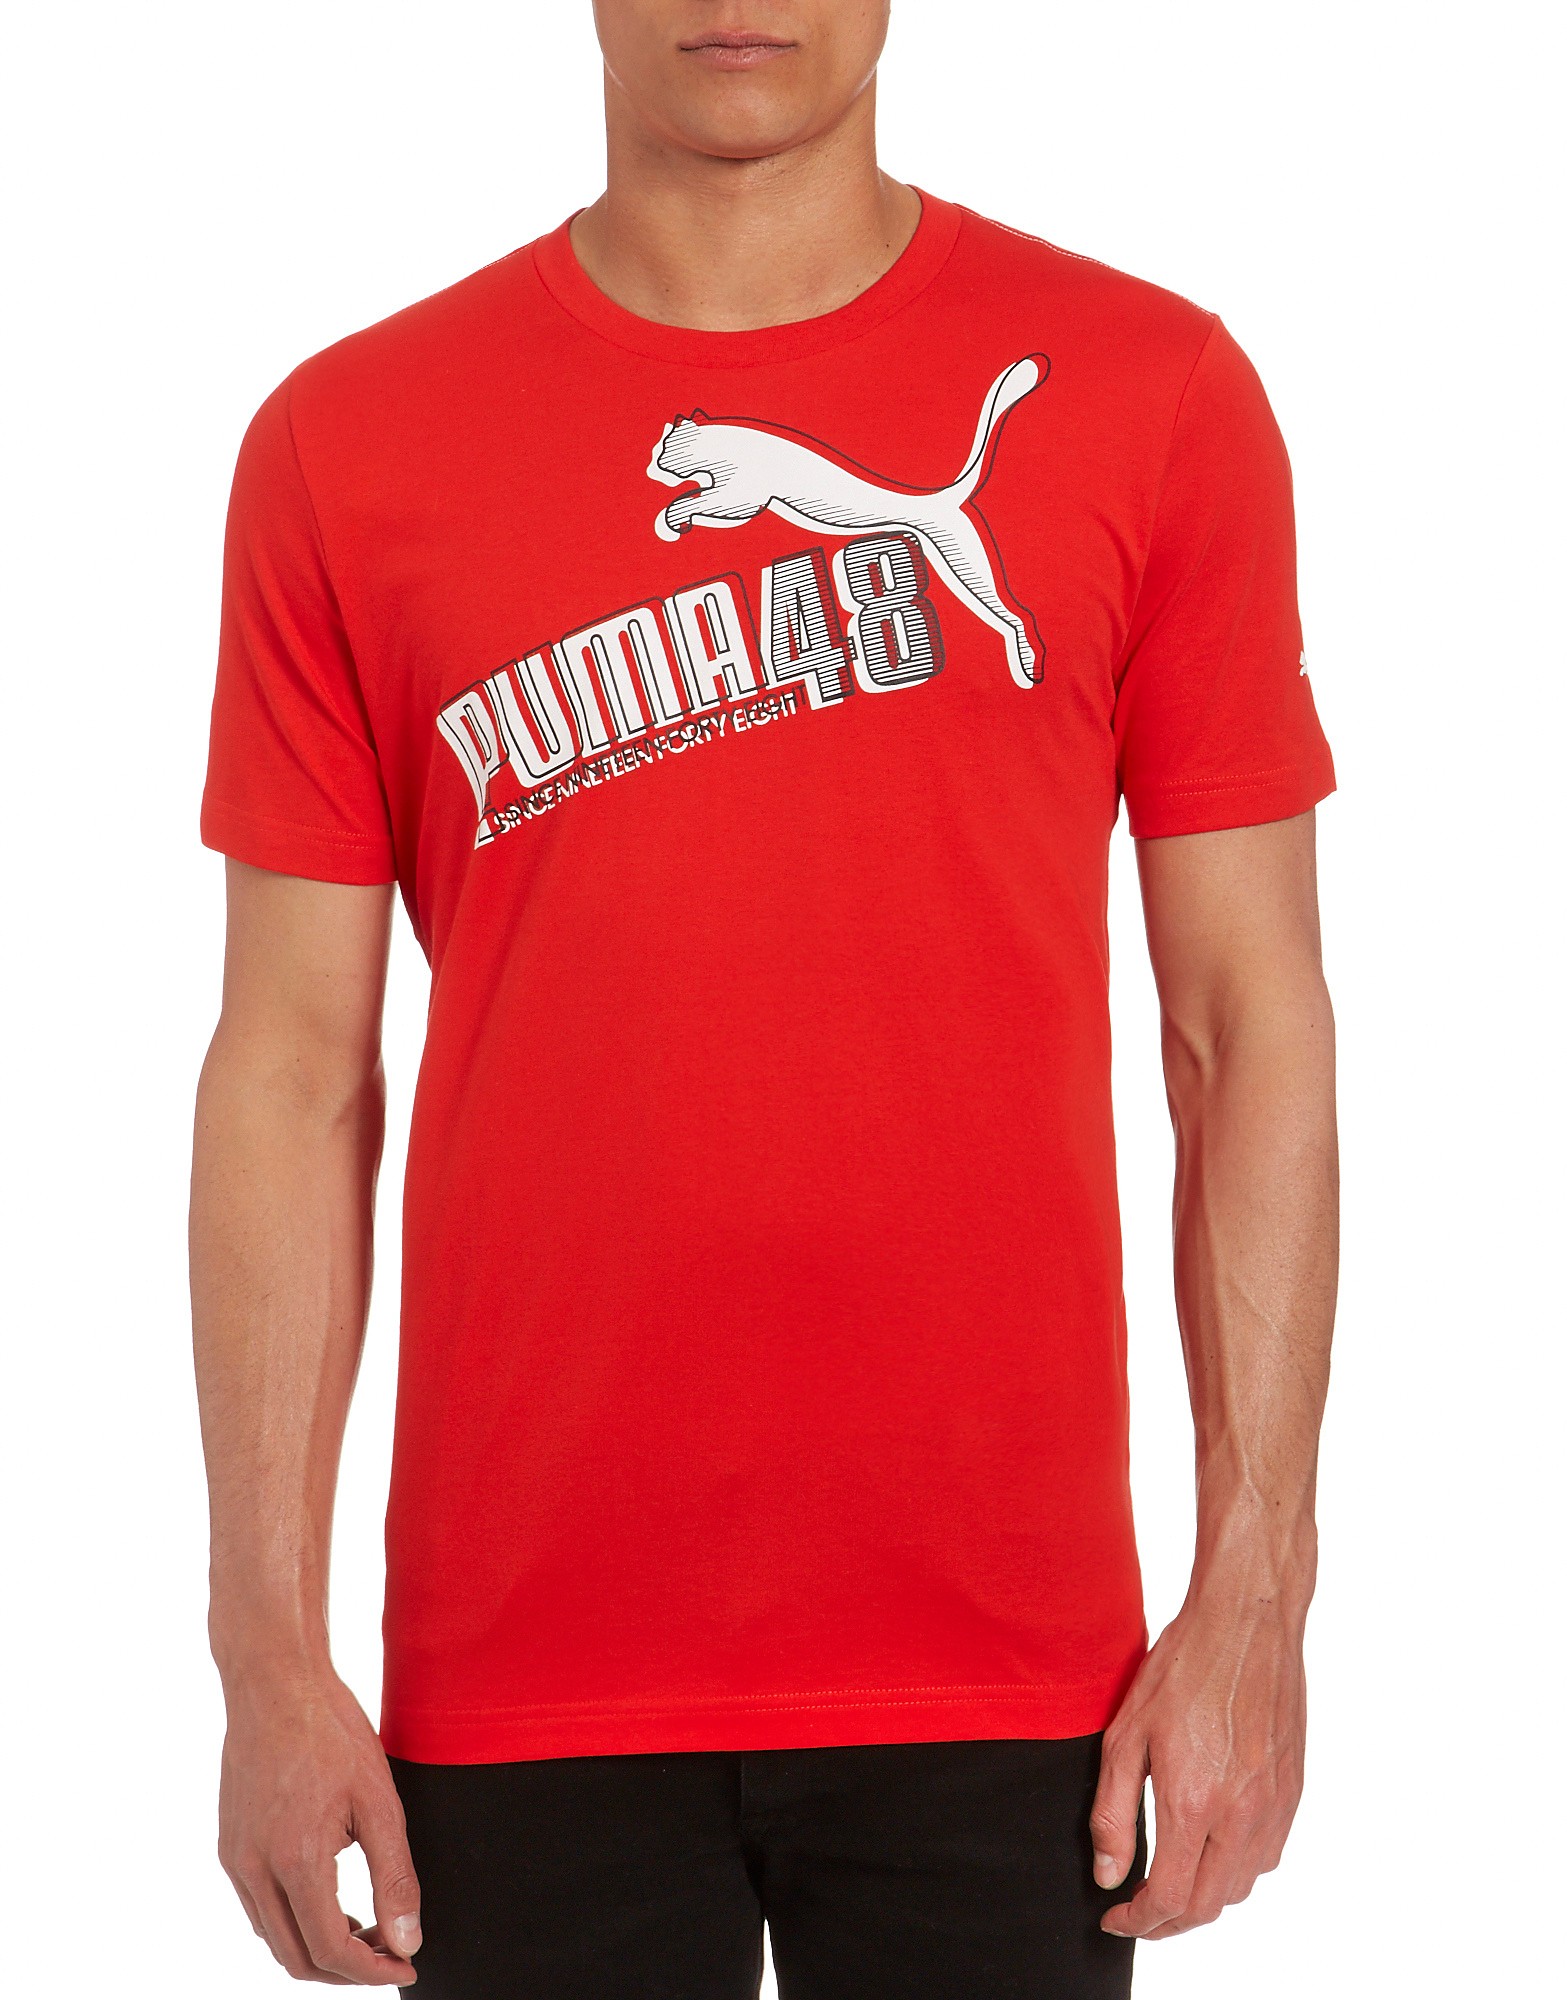 Puma Sketch T-Shirt